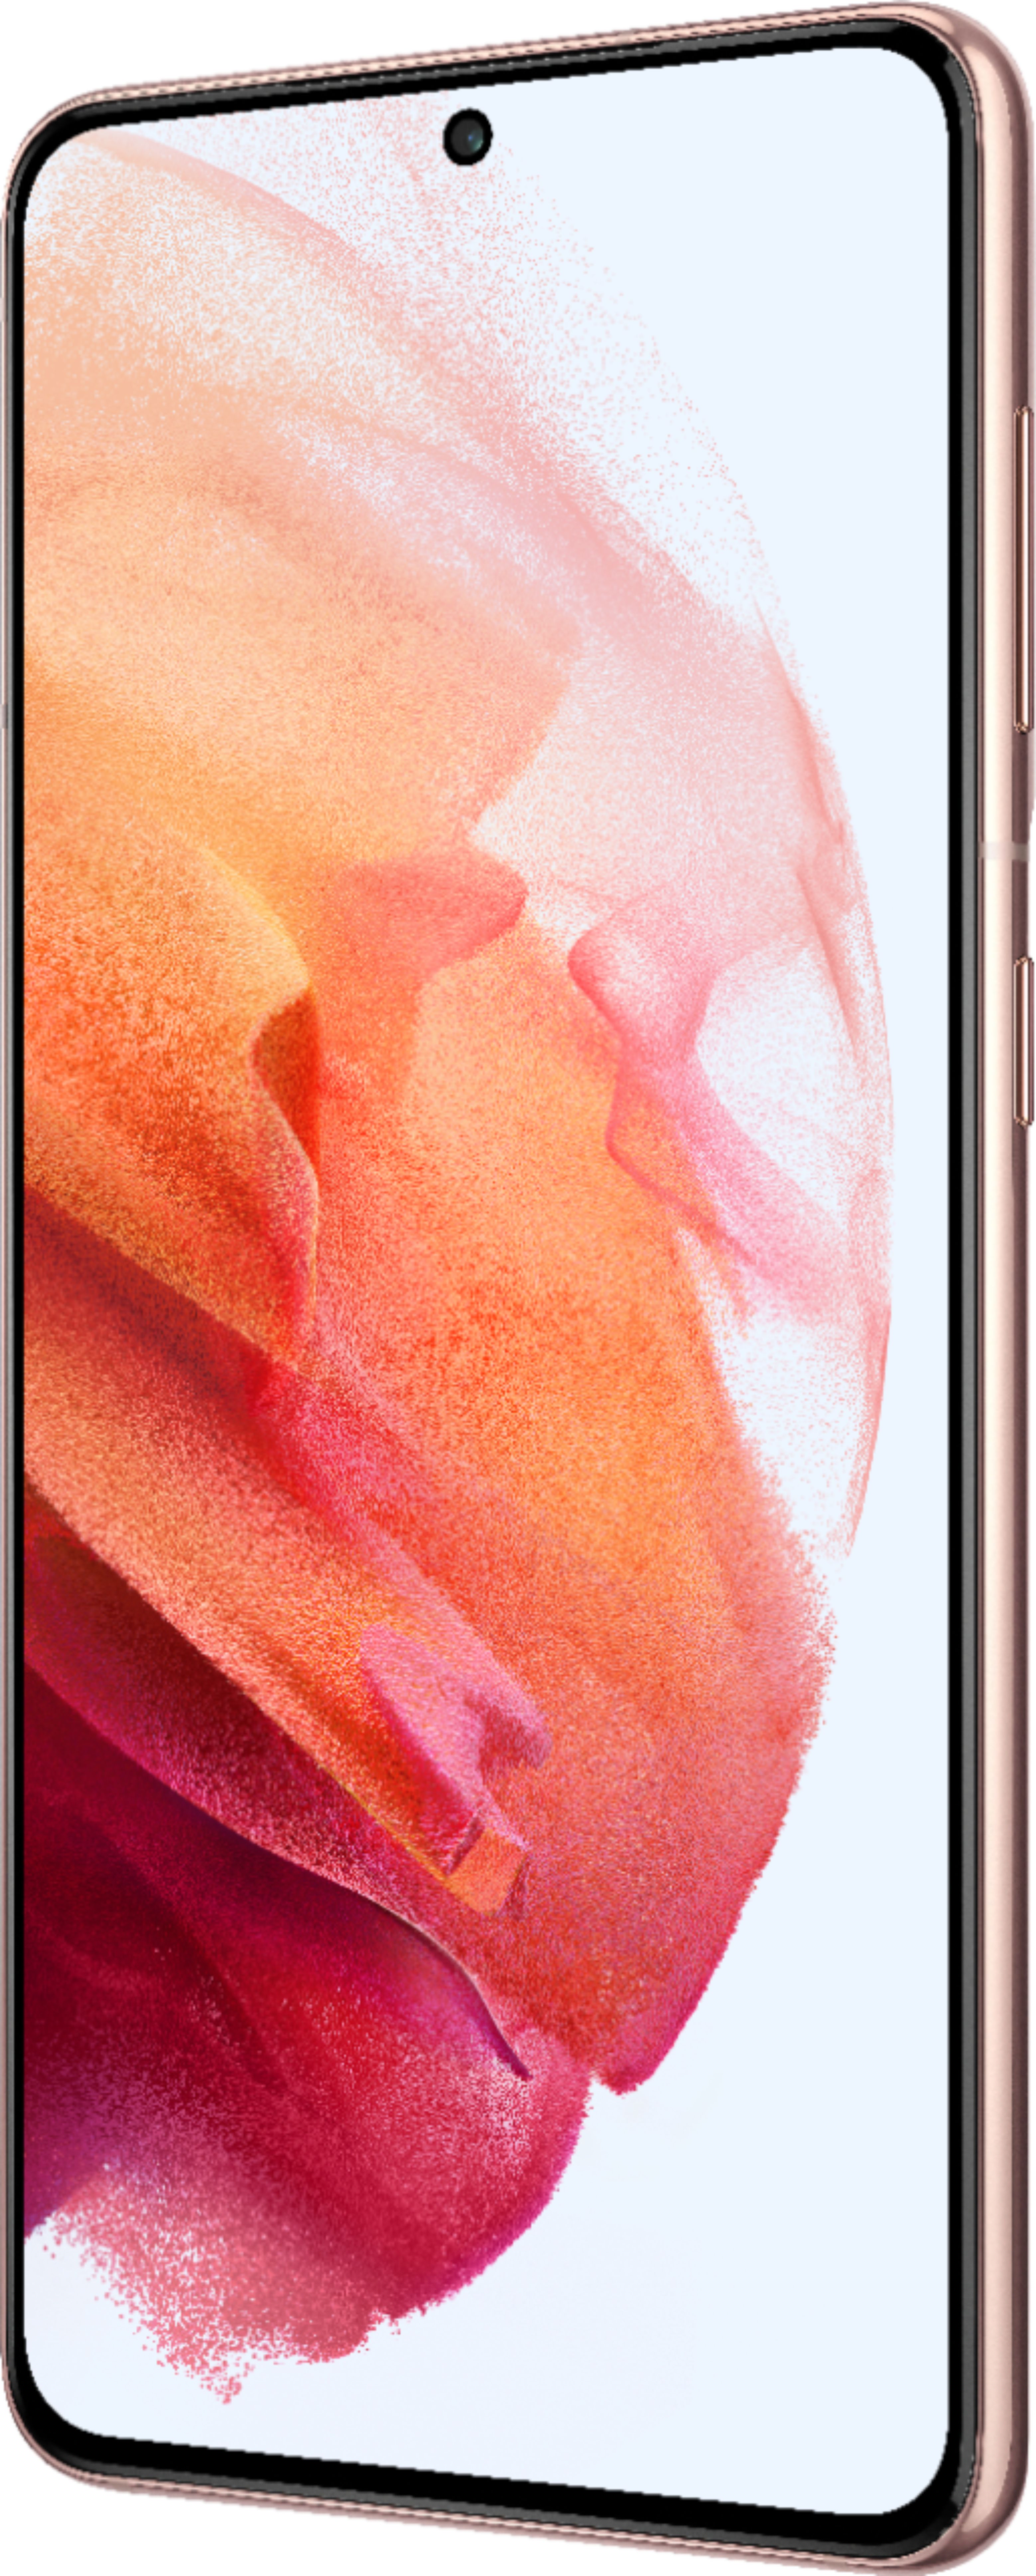 Samsung Galaxy S21 5G G991B 256GB Dual Sim GSM Unlocked Android Smartphone (International Variant/US Compatible LTE) - Phantom Pink - image 3 of 9